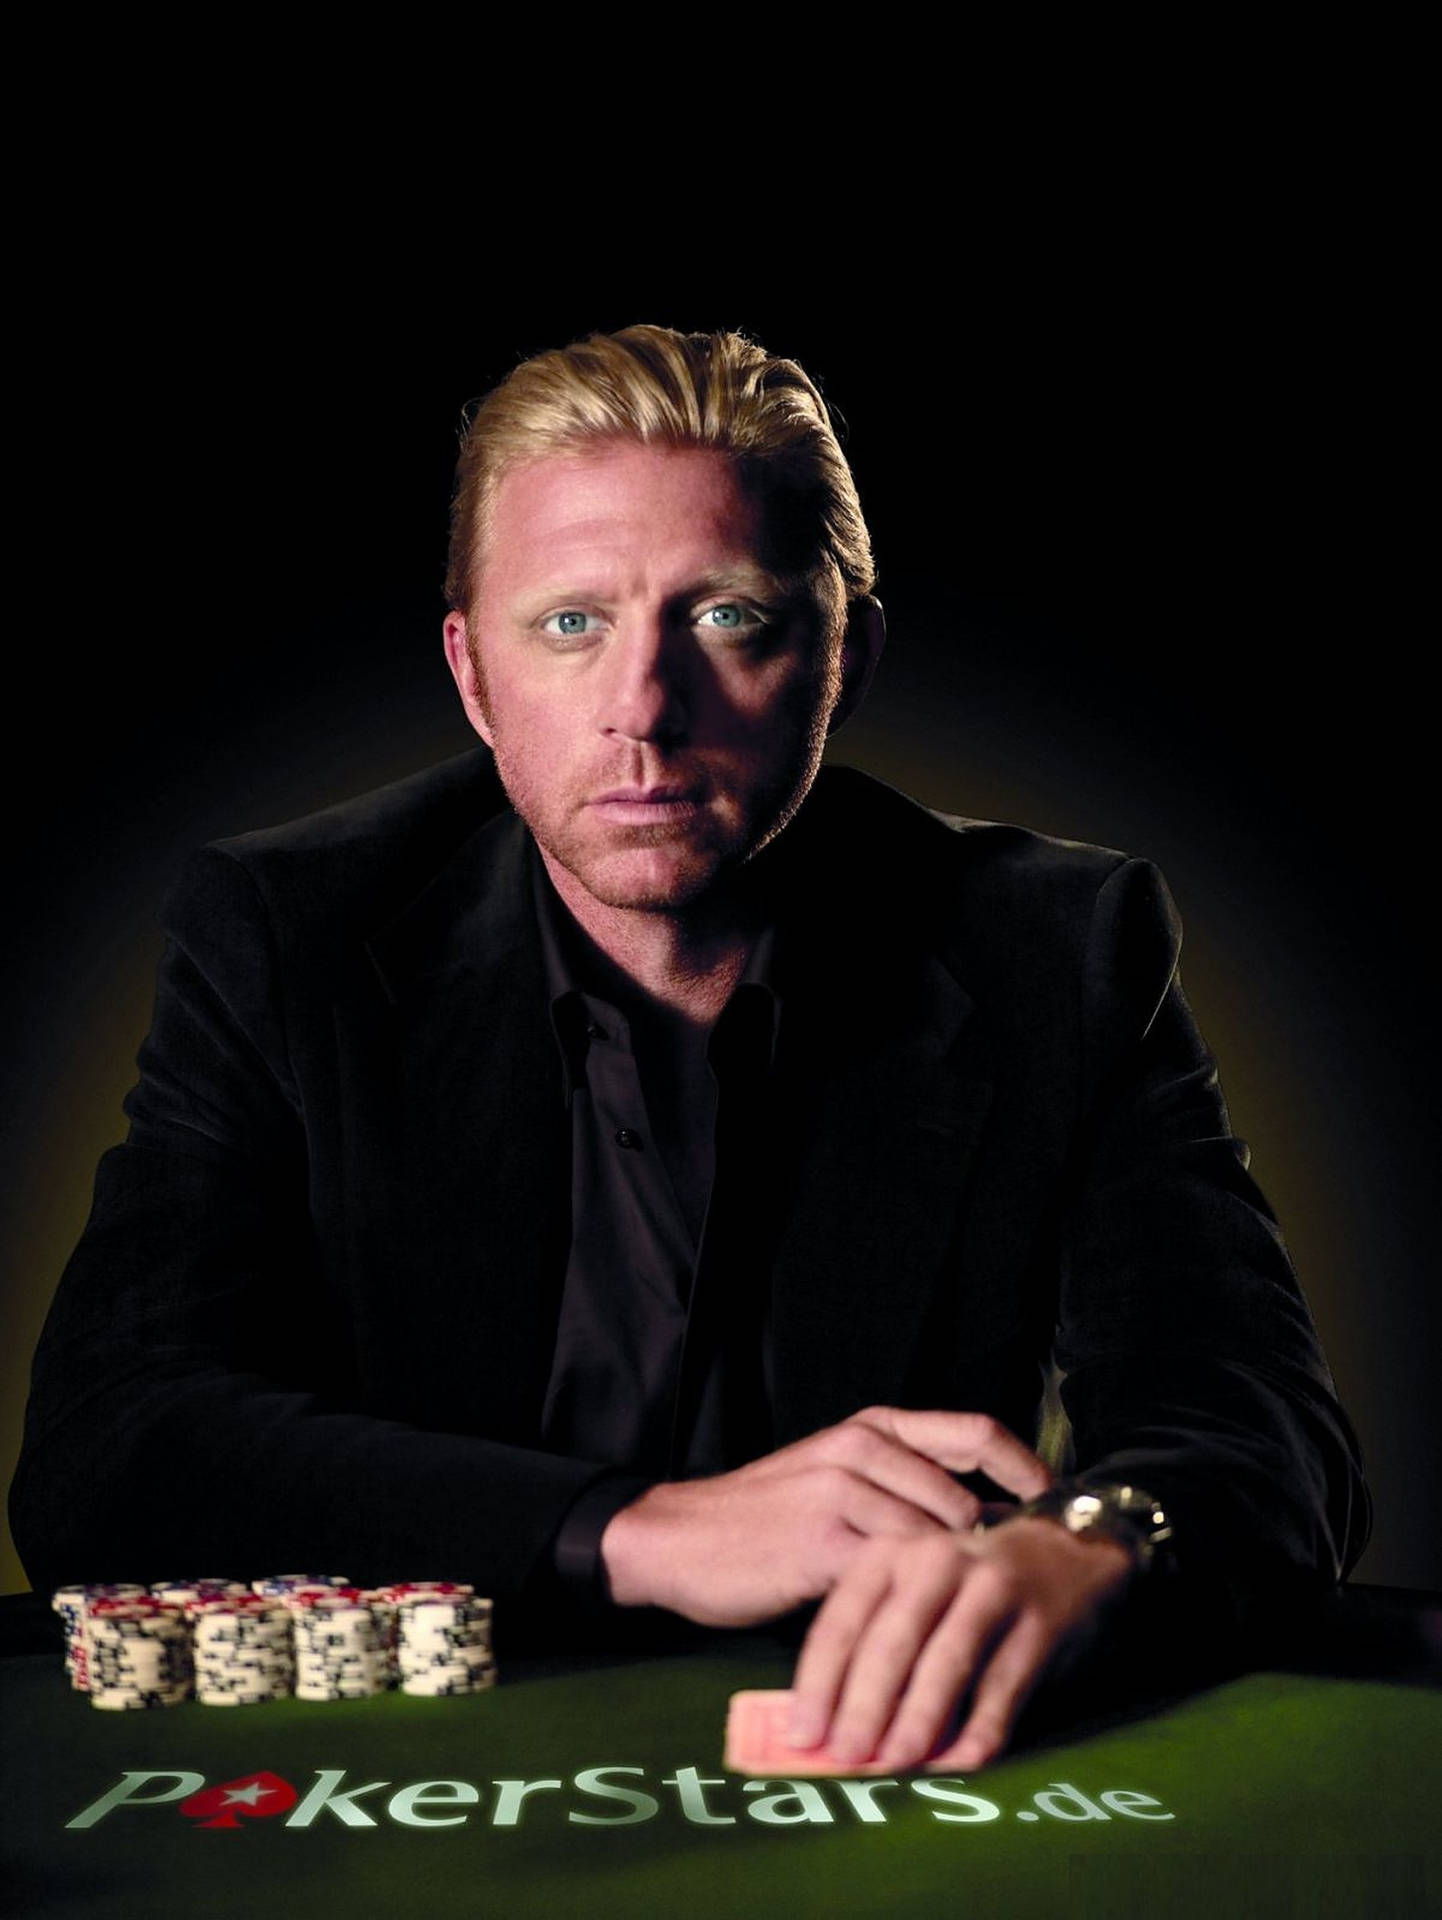 Pokerstarsboris Becker. Wallpaper